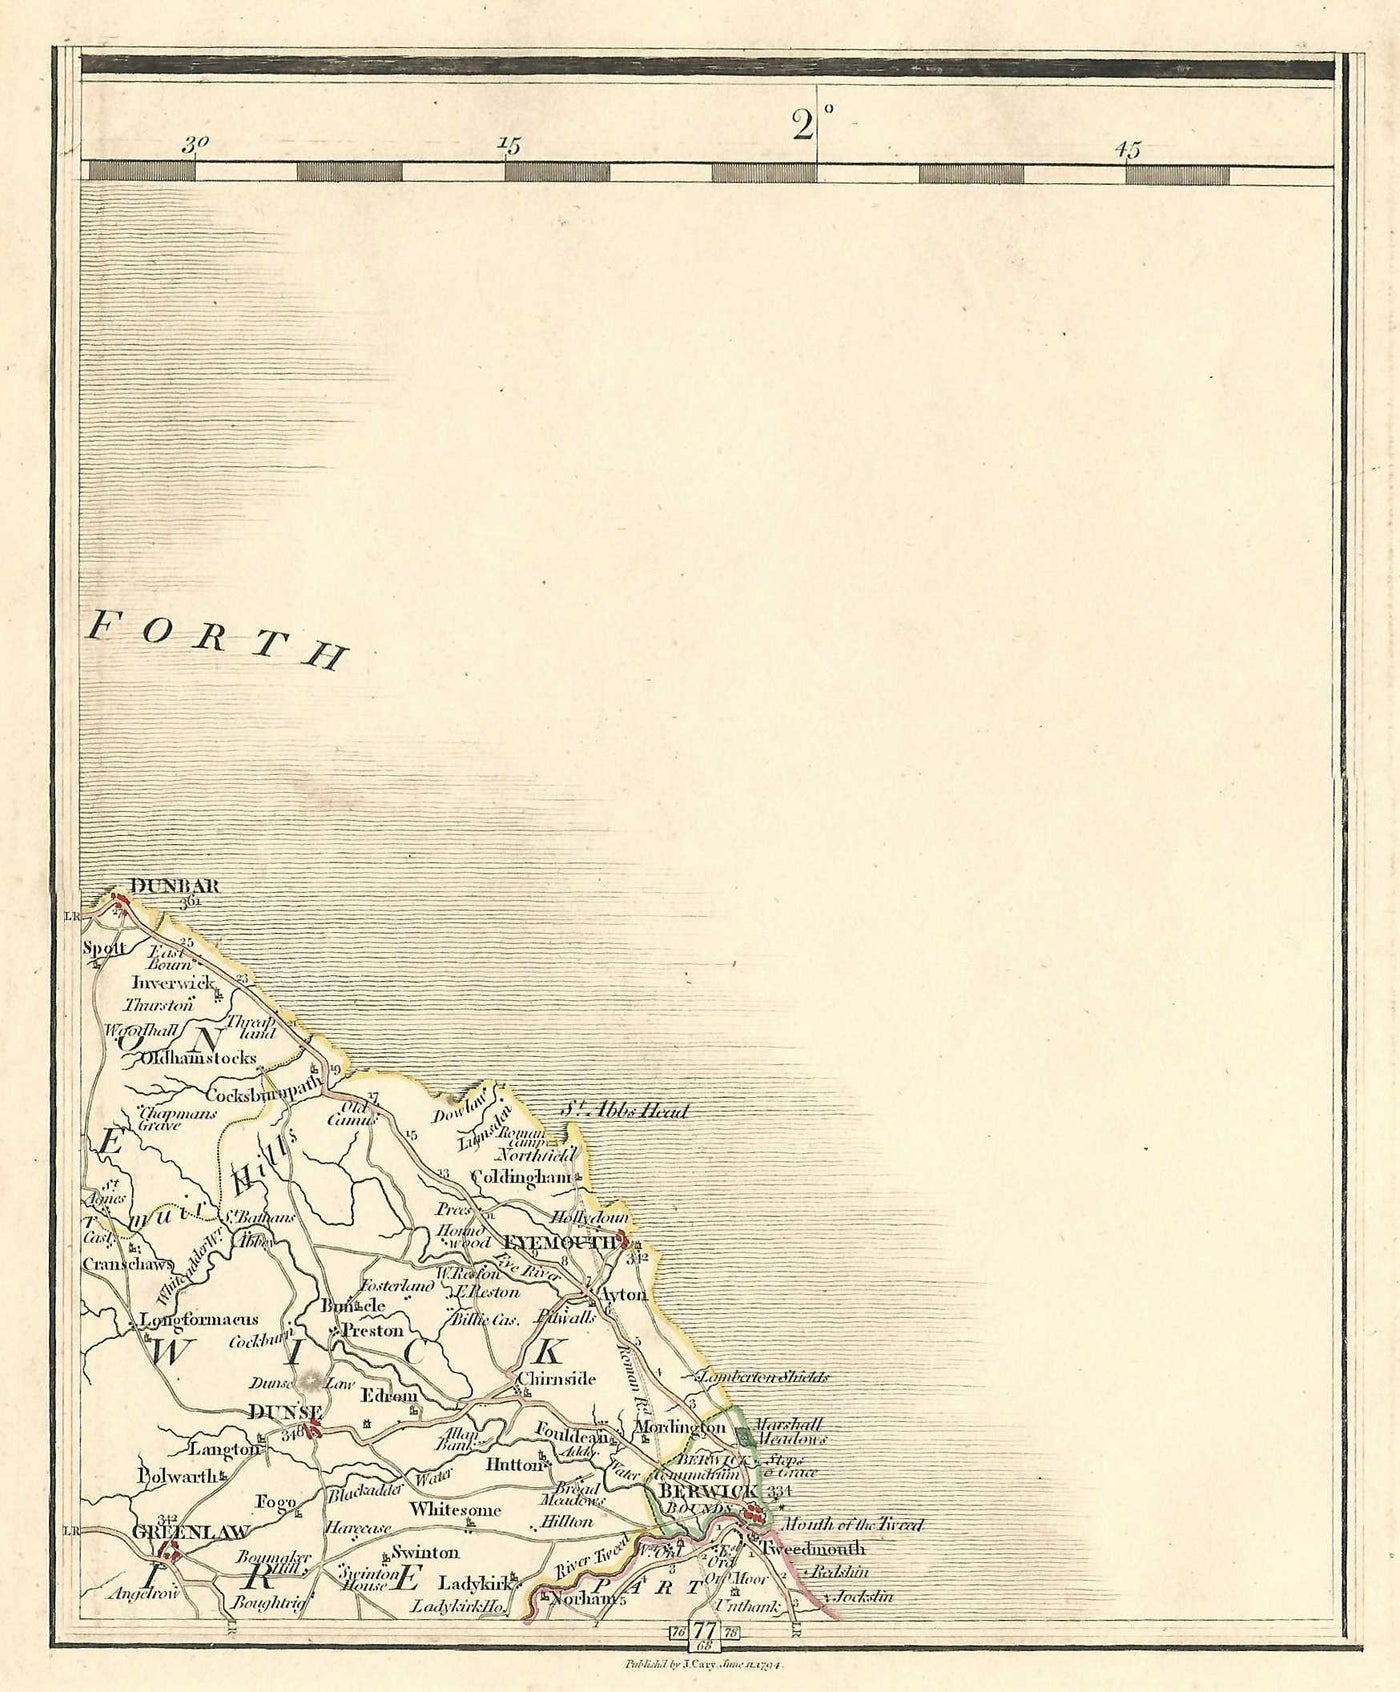 Dunbar Eyemouth Duns Greenlaw Scotland Berwick antique map 1794